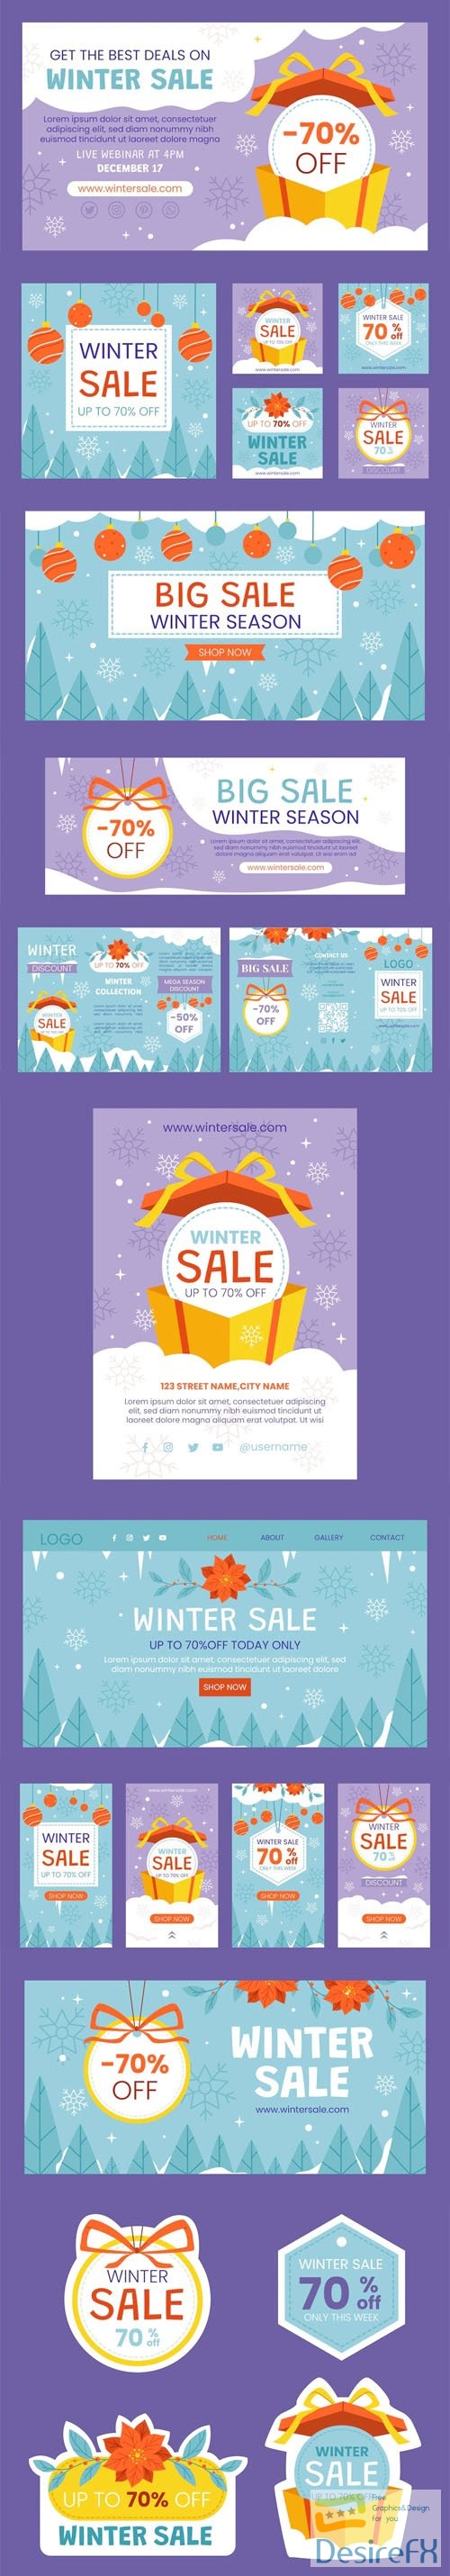 Hand Drawn Winter Sales Flat Marketing Pack Vector Templates